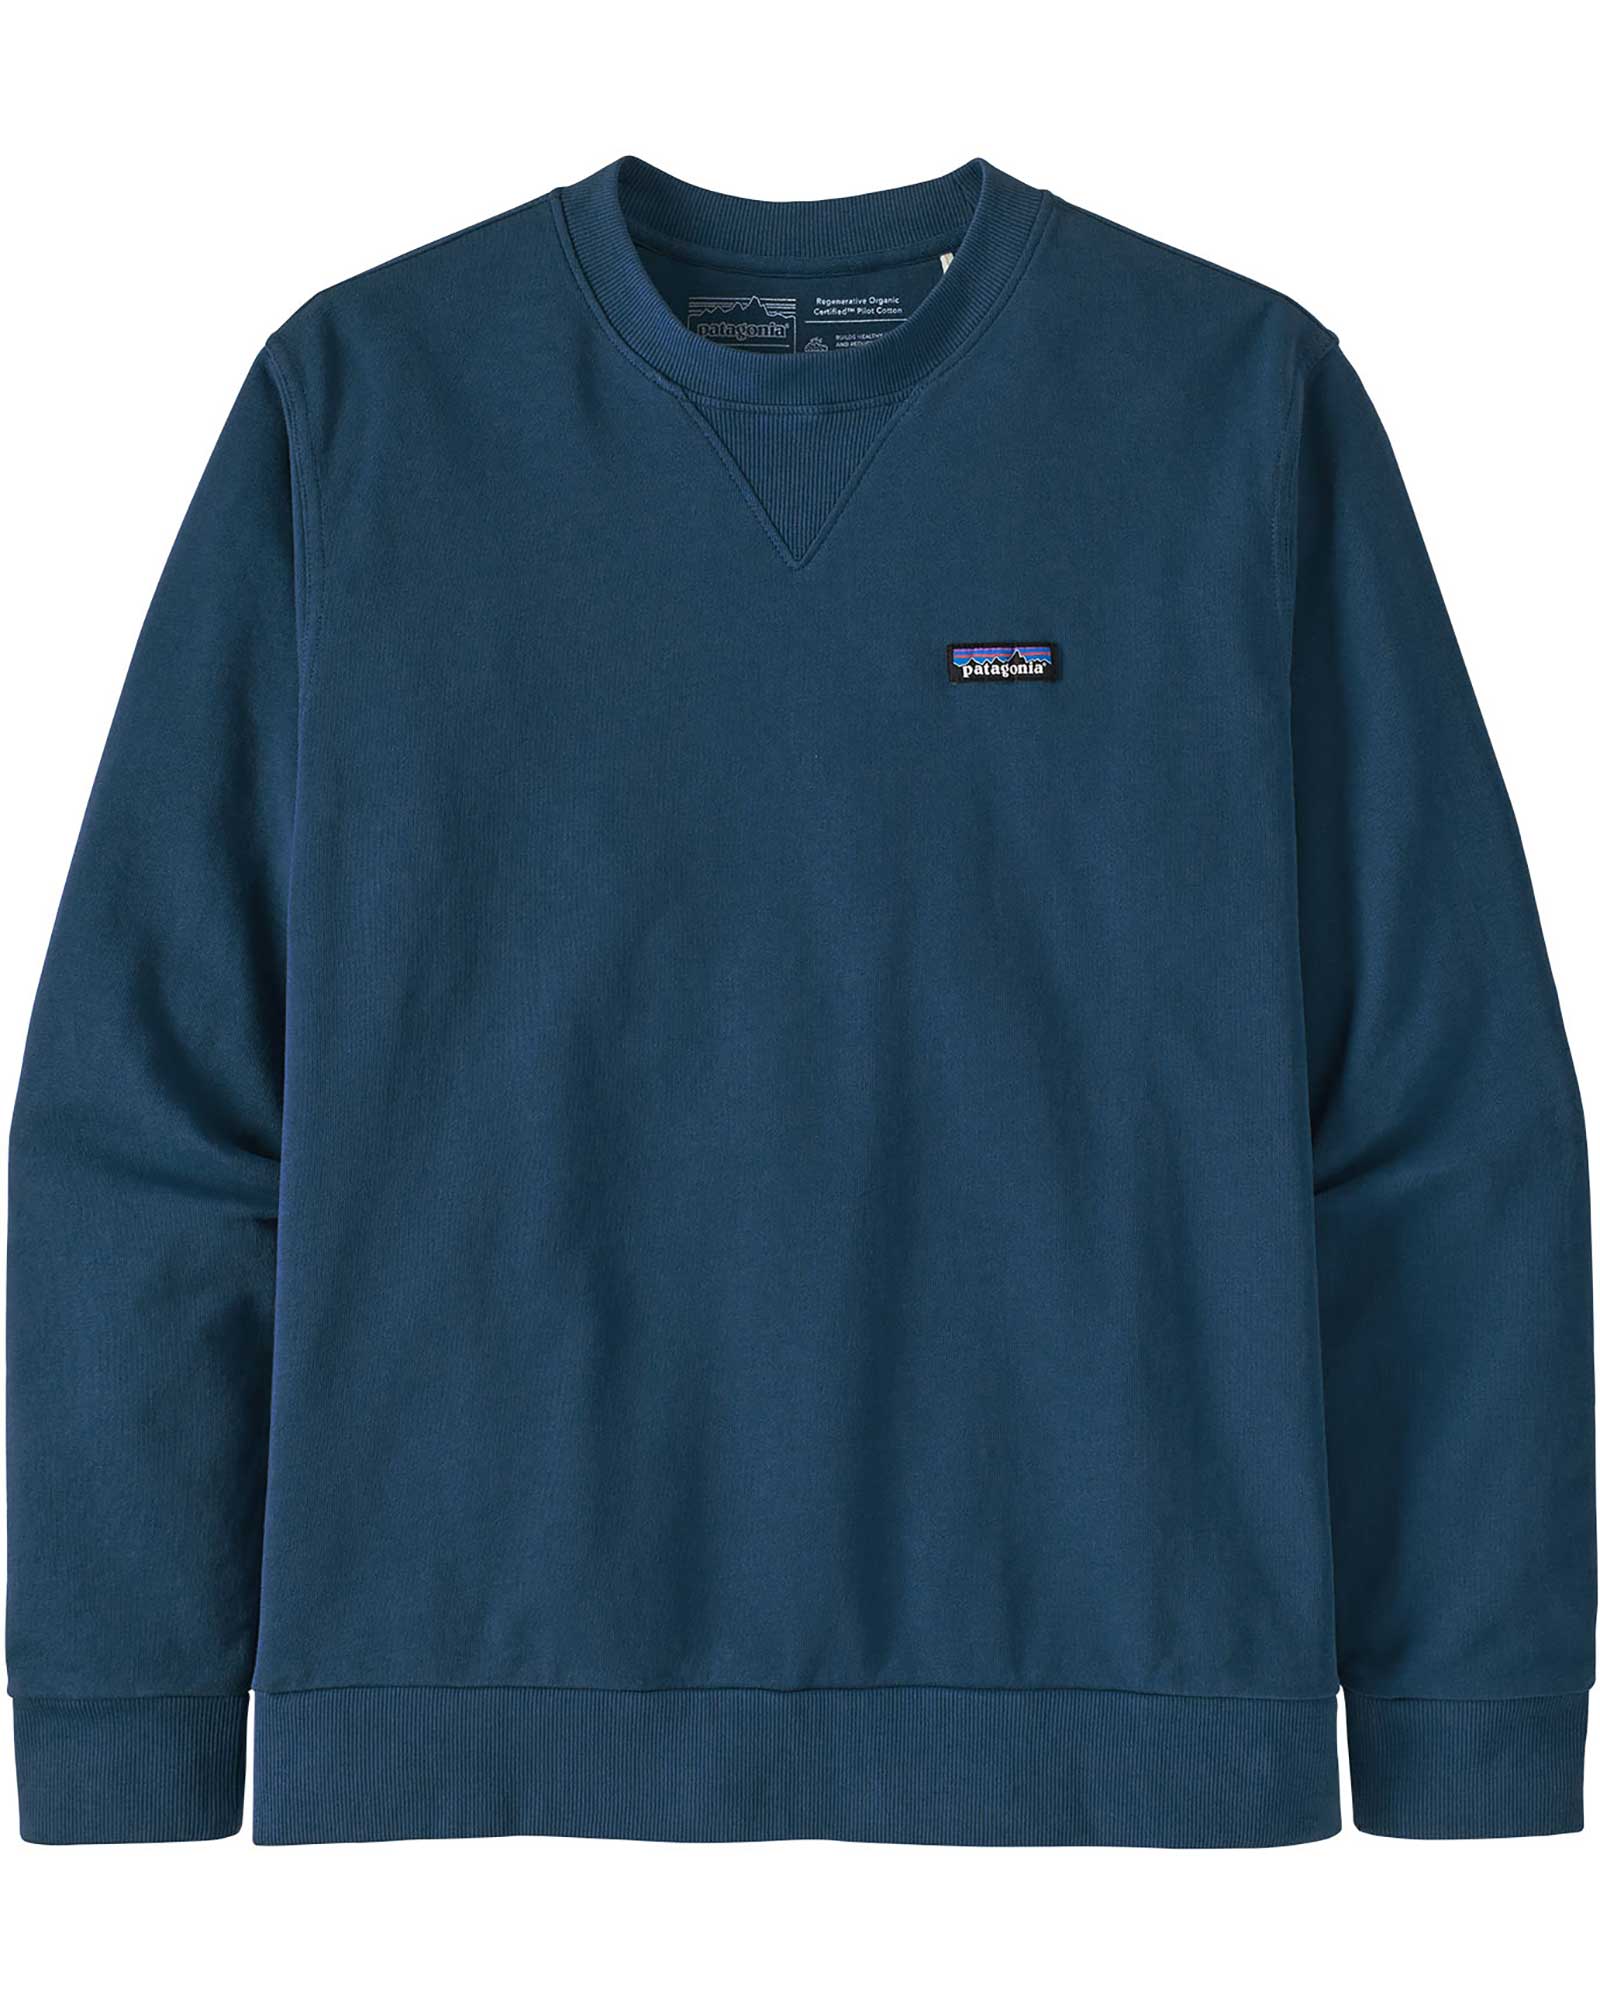 Patagonia Regen Cotton Men’s Crewneck Sweatshirt - Tidepool Blue S